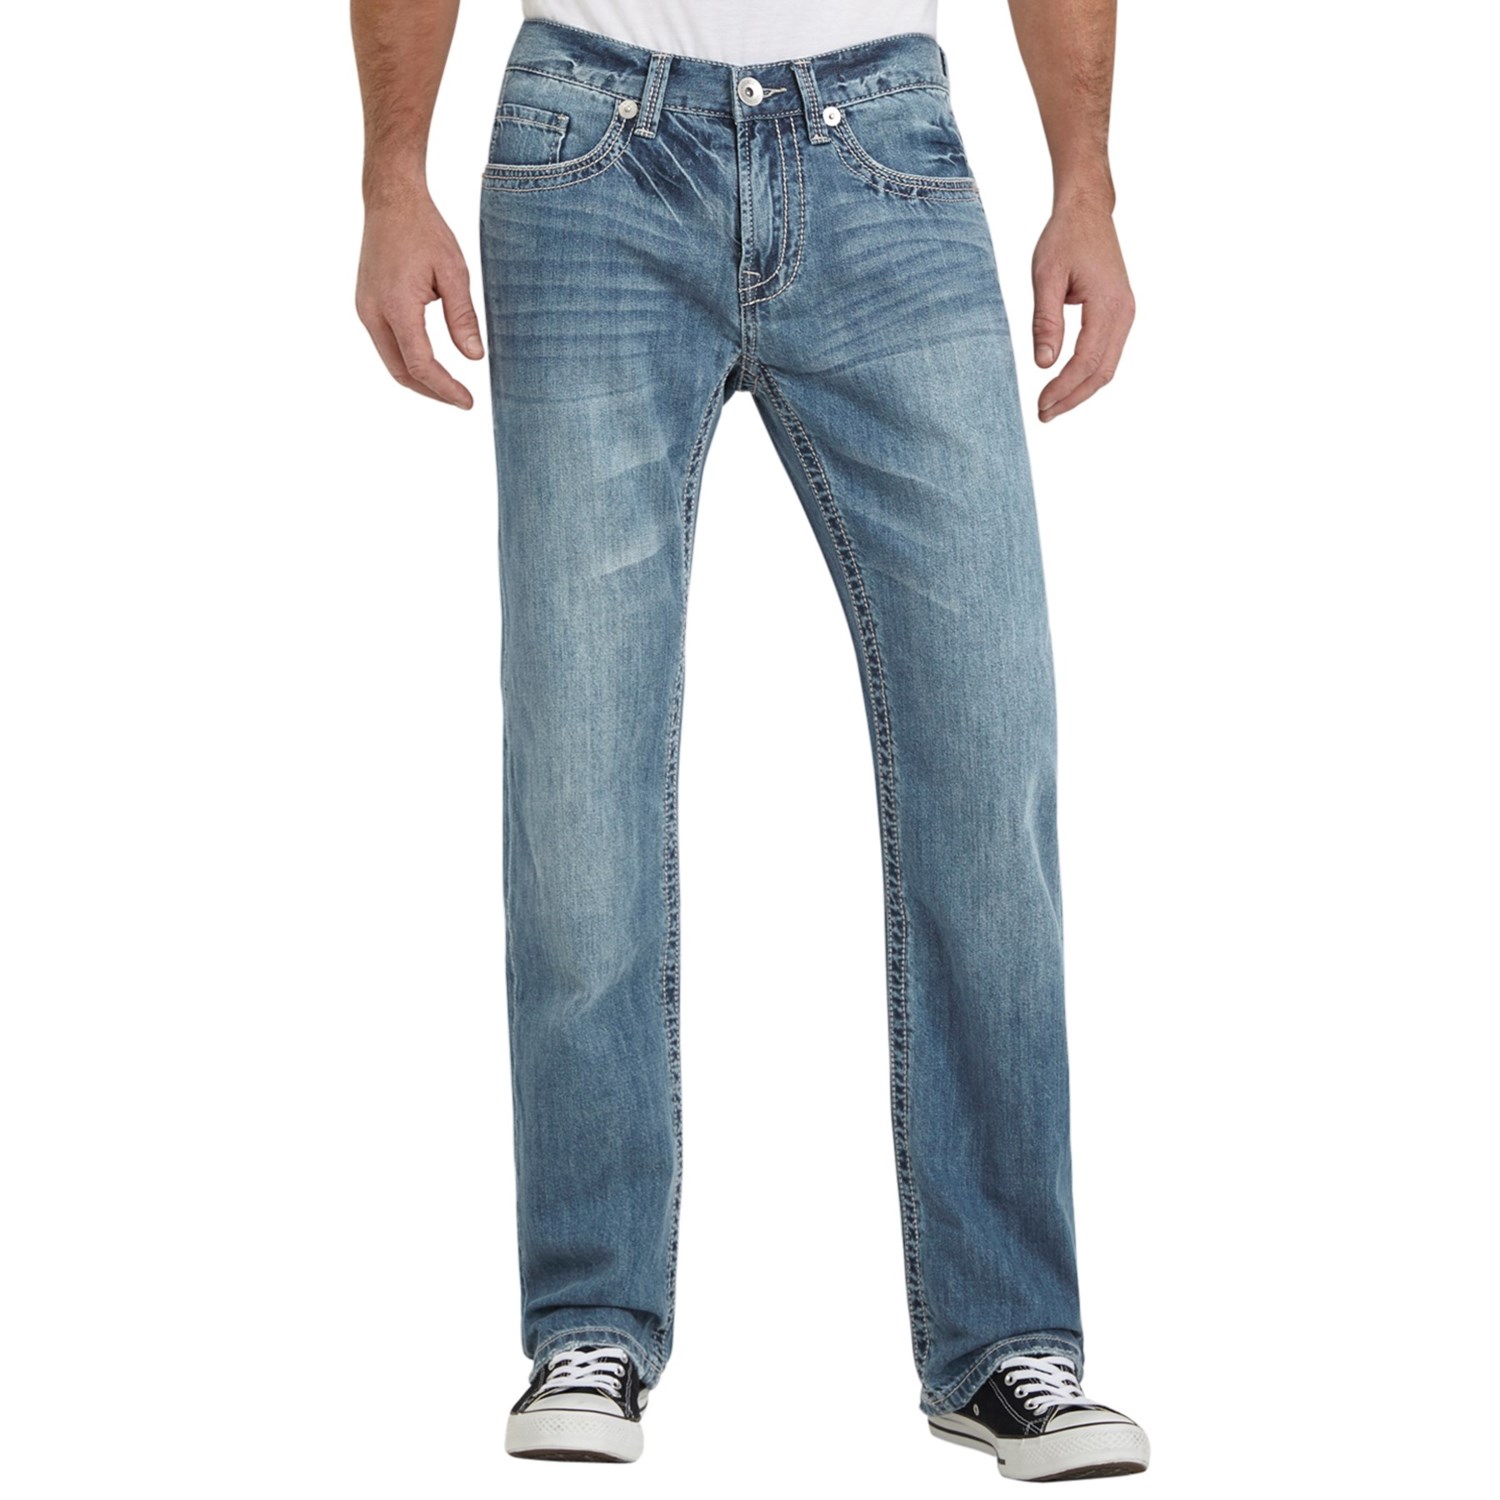 Seven7 Luxury Denim Jeans (For Men) - Save 63%